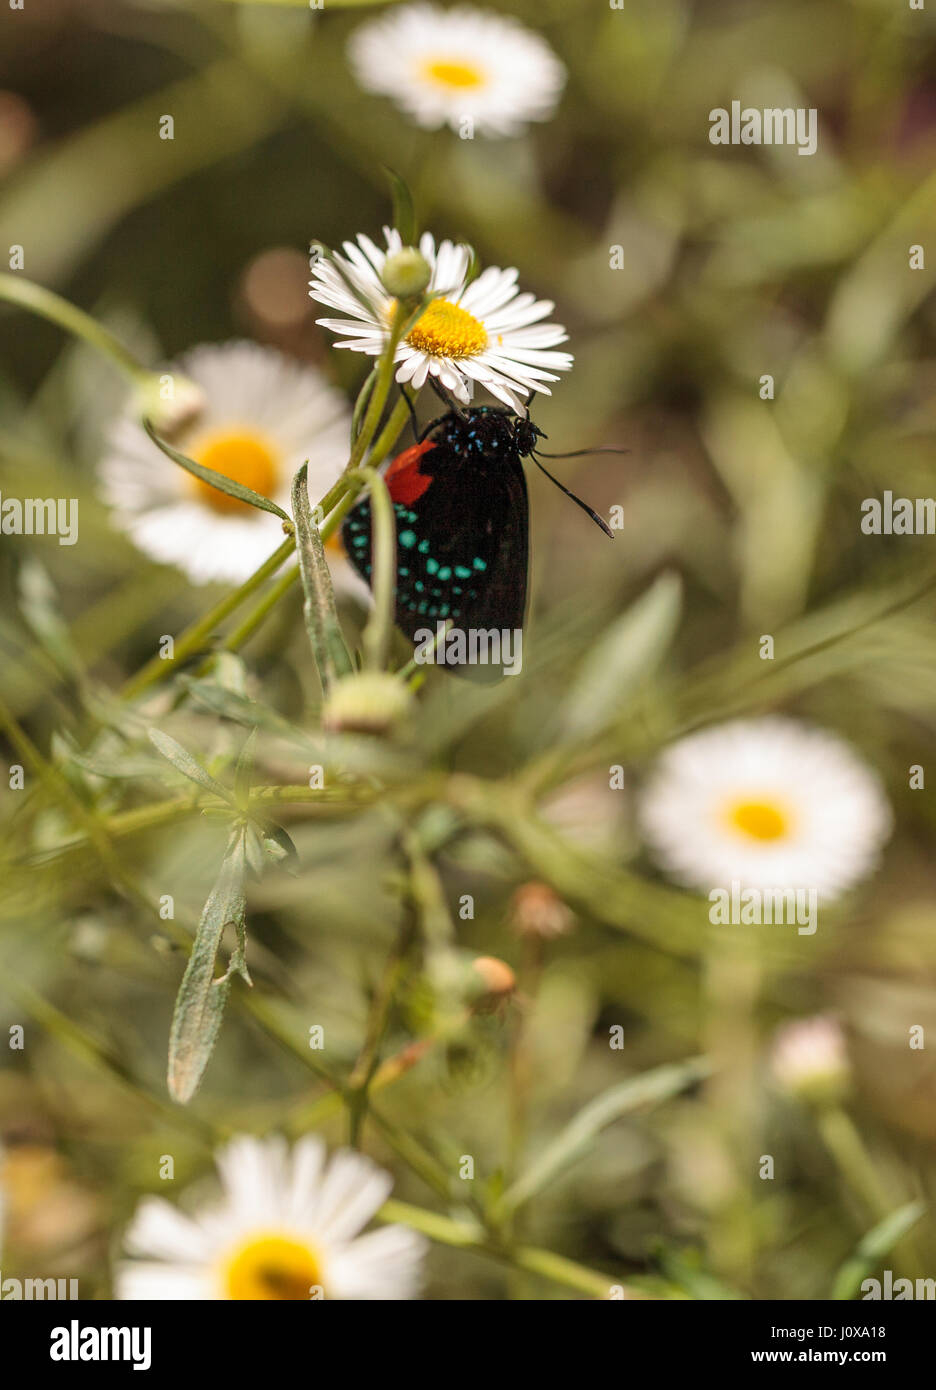 Atala hairstreak butterfly, Eumaeus atala, on a daisy flower in a garden in spring Stock Photo